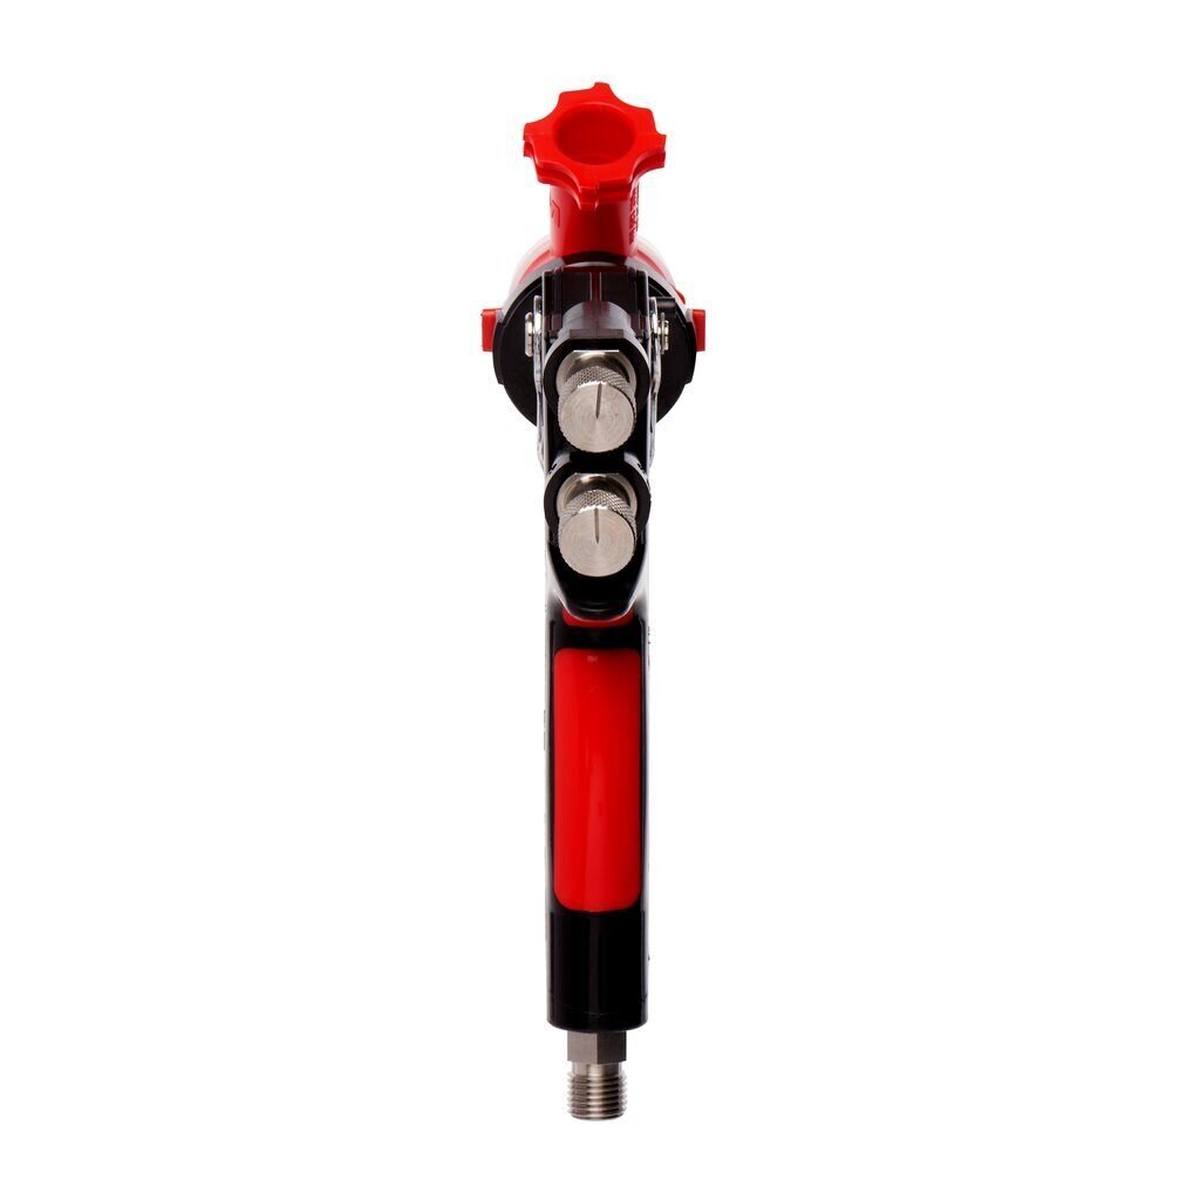 3M Accuspray drukbekerpistool HGP, verpakkingsinhoud: 1x drukbekerpistool, 2x sproeikoppen 2,0mm rood 16609, 2x sproeikoppen 1,8mm wit 16611, 1 manometer #16587N